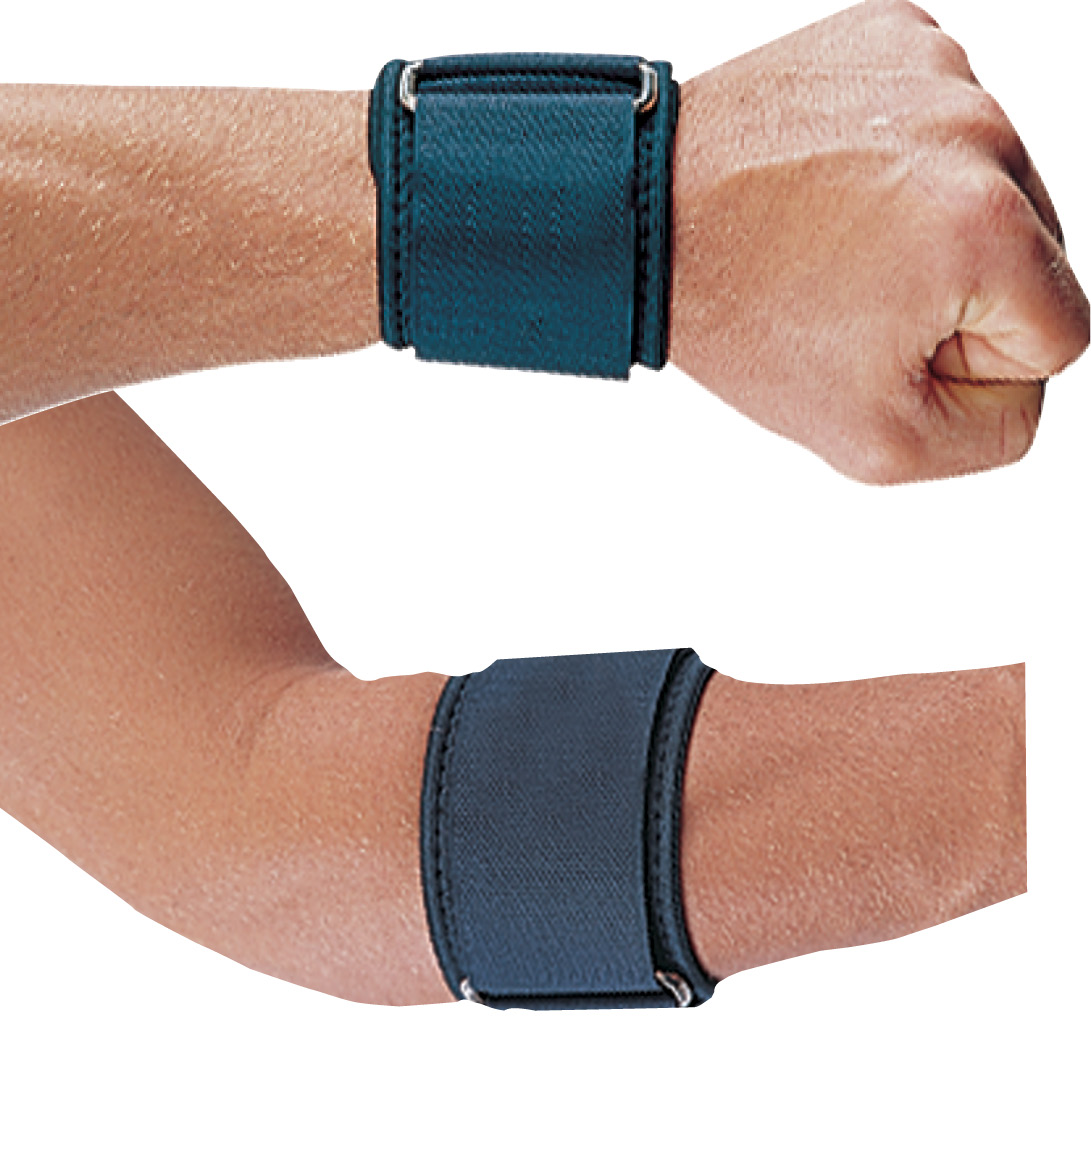 1075140, Adjustable Neoprene Wrist Support, MutualIndustries